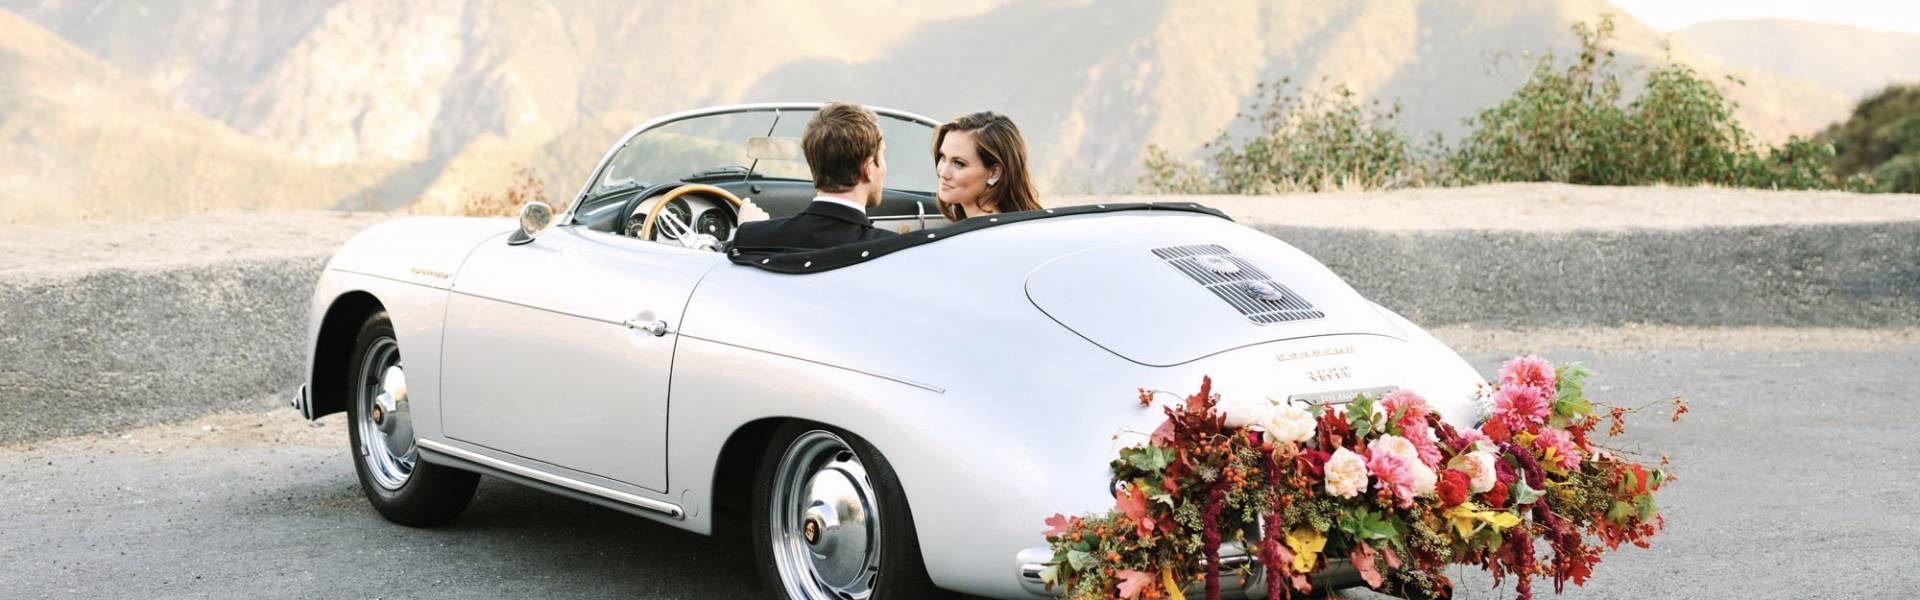 Wedding Cars, Hire Los Angeles, Classic, Romantic